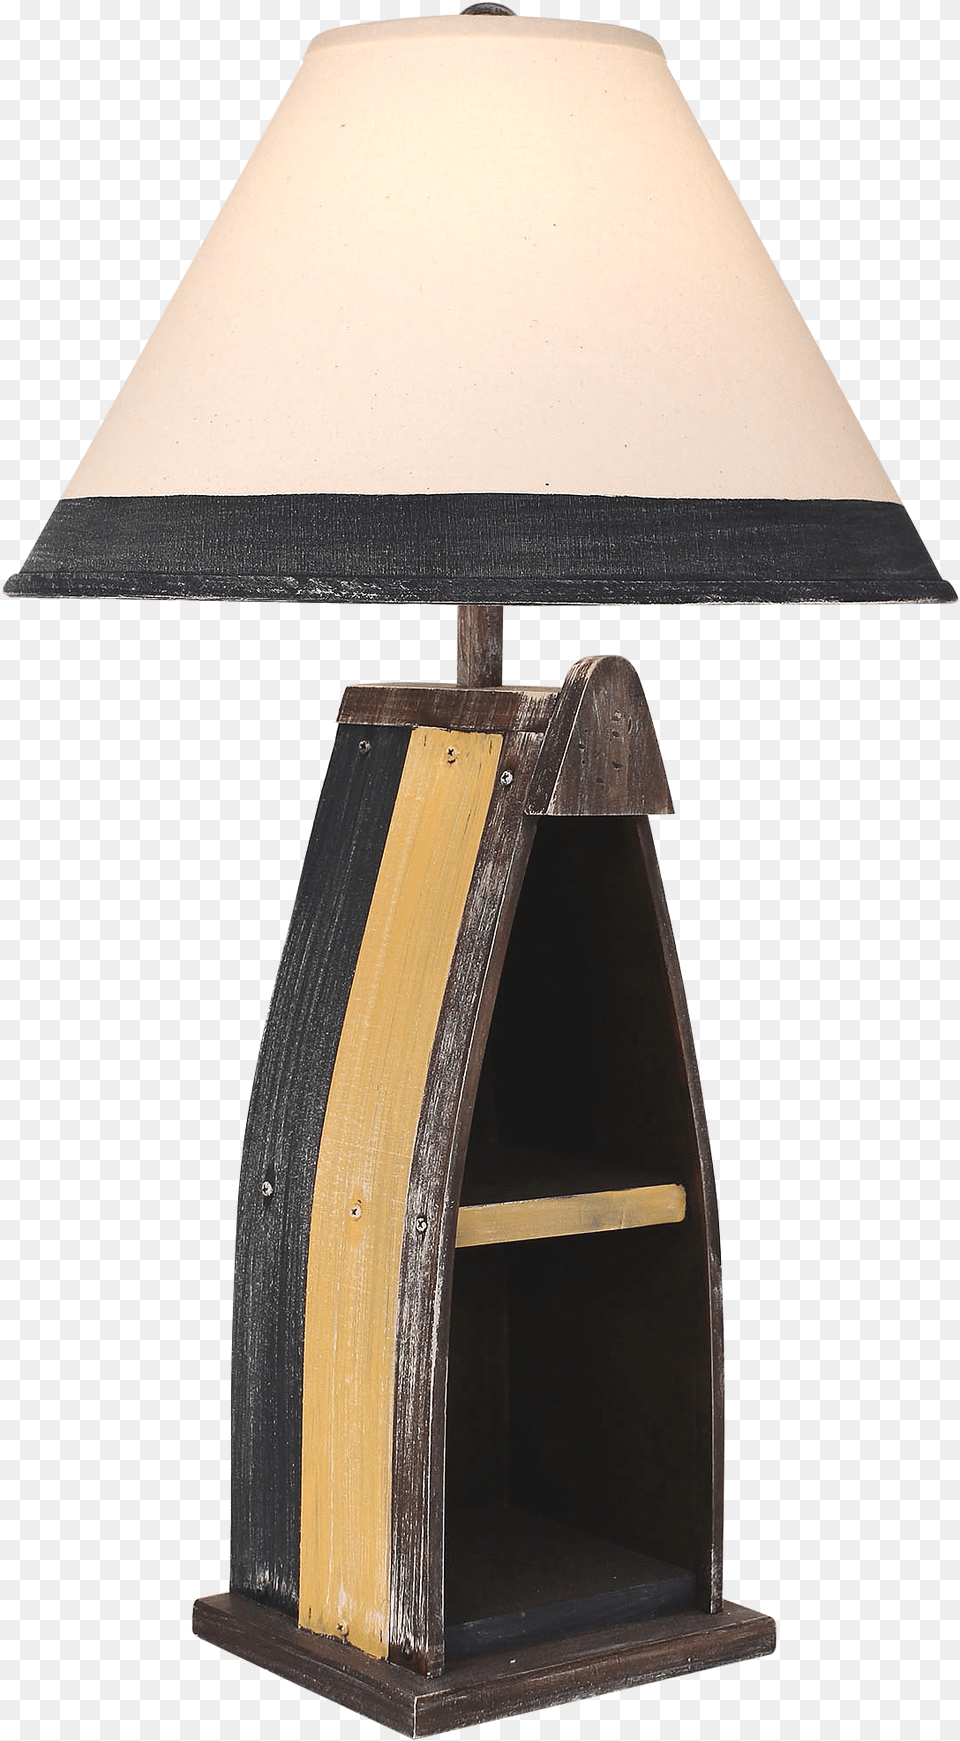 Sail Wooden Boat Table Lamp Lampshade, Table Lamp, Mailbox Png Image